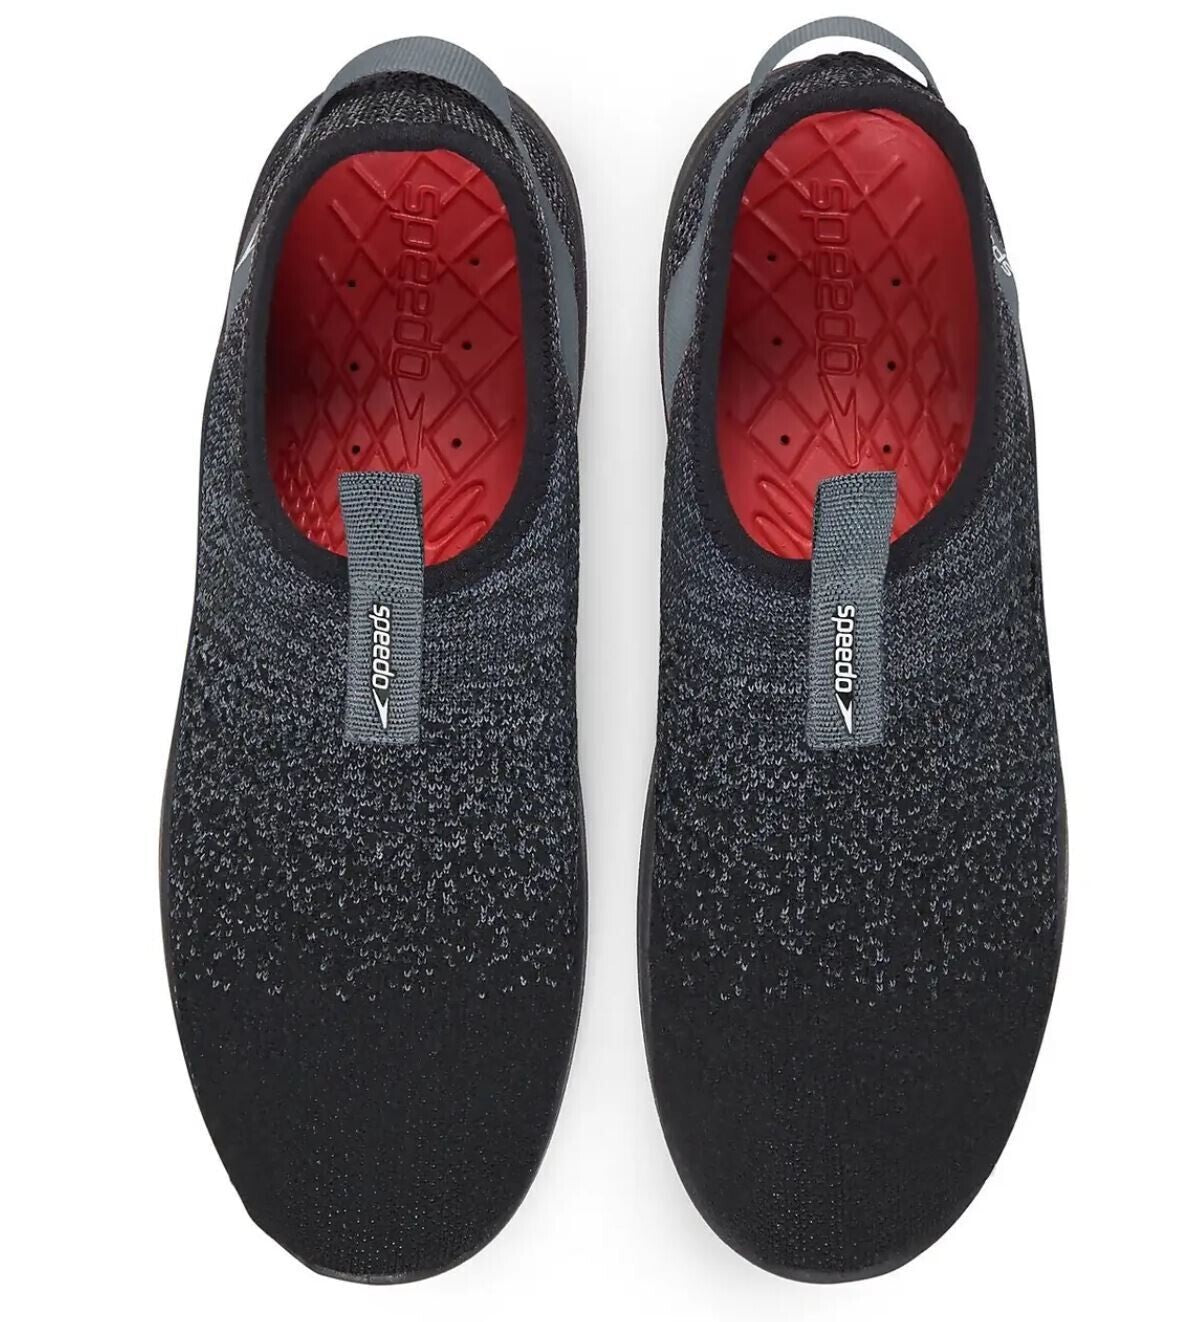 Speedo Men's Black/Gray Size 12 Surf Knit Pro Water Shoes